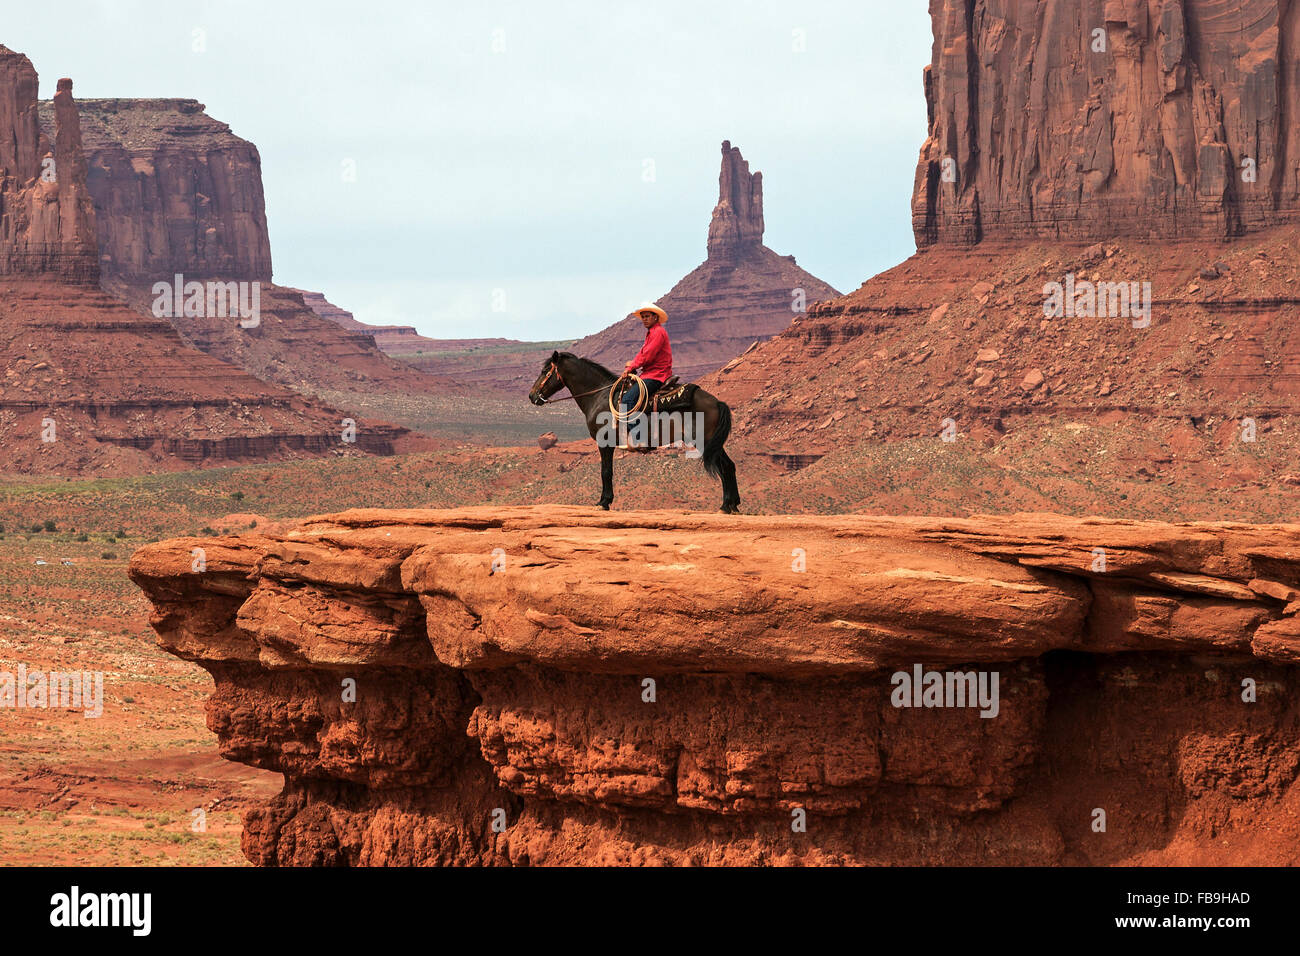 Rock formations, Indian on horse at John Wayne Point, Monument Valley Navajo Tribal Park, Arizona, USA Stock Photo